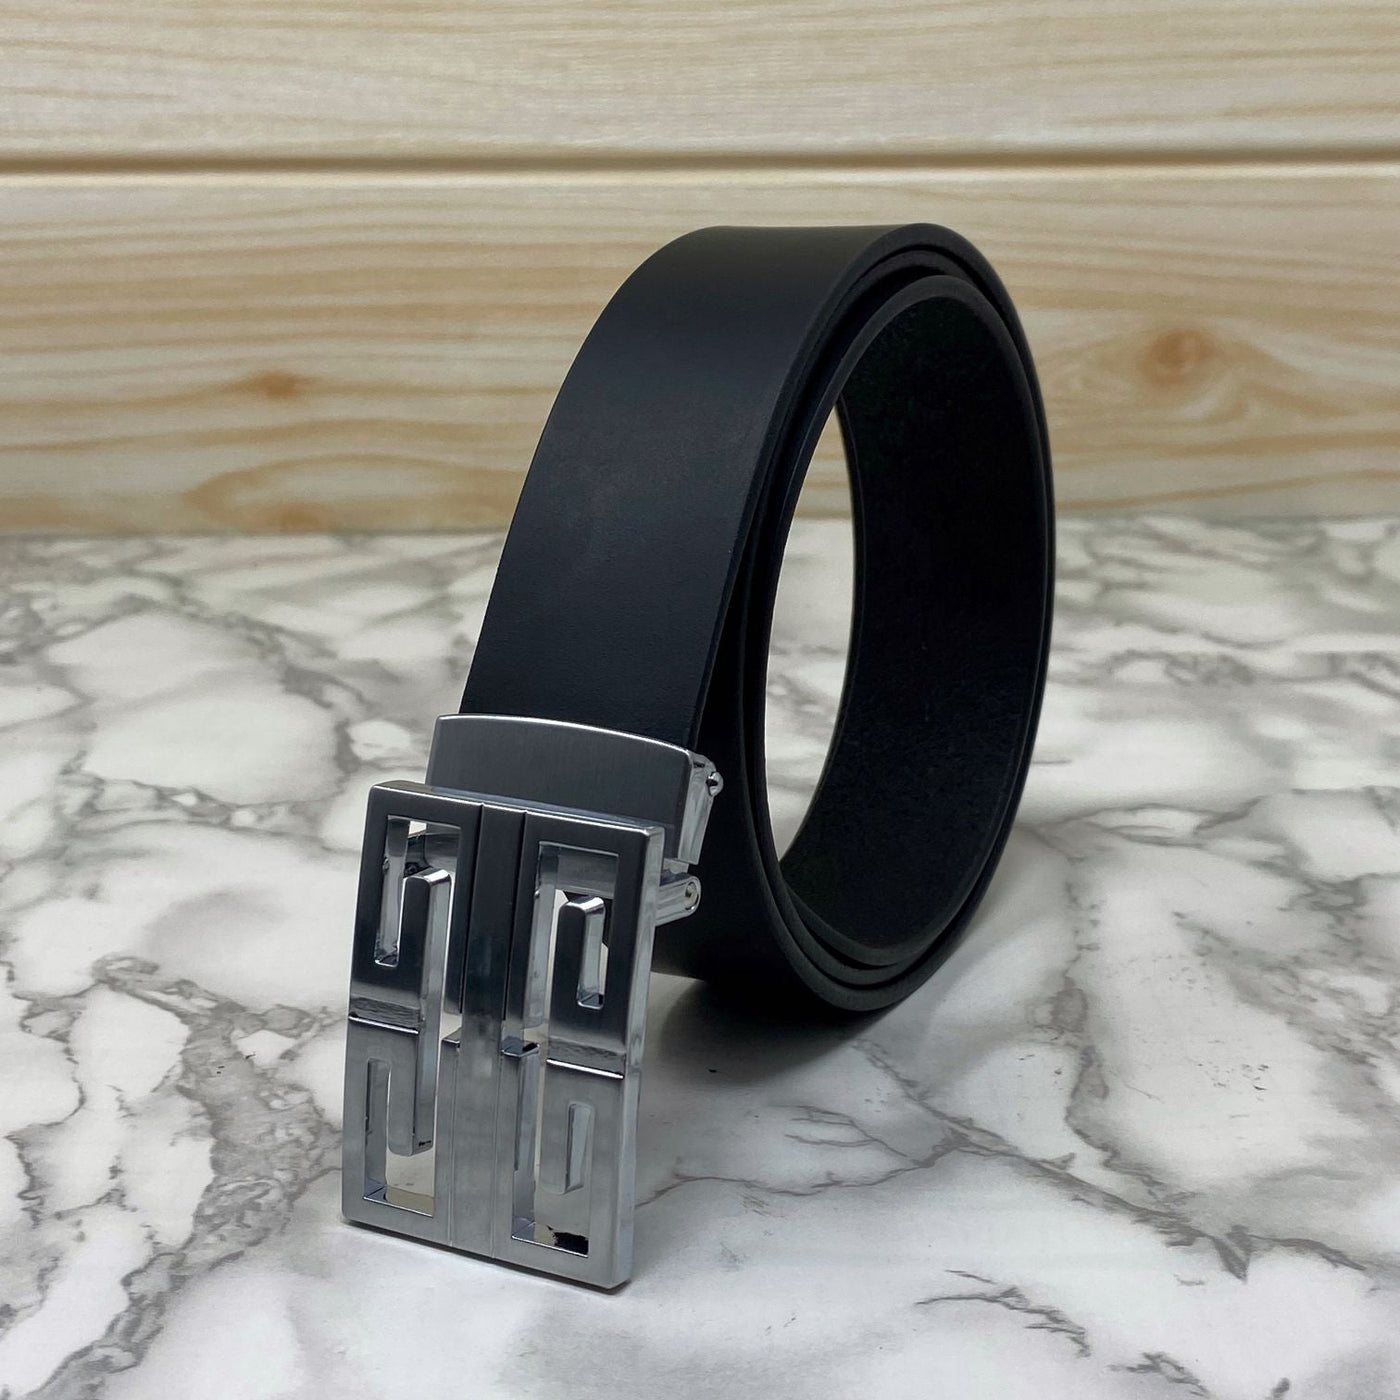 New Arrival Square Formal Leather Belt-UniqueandClassy